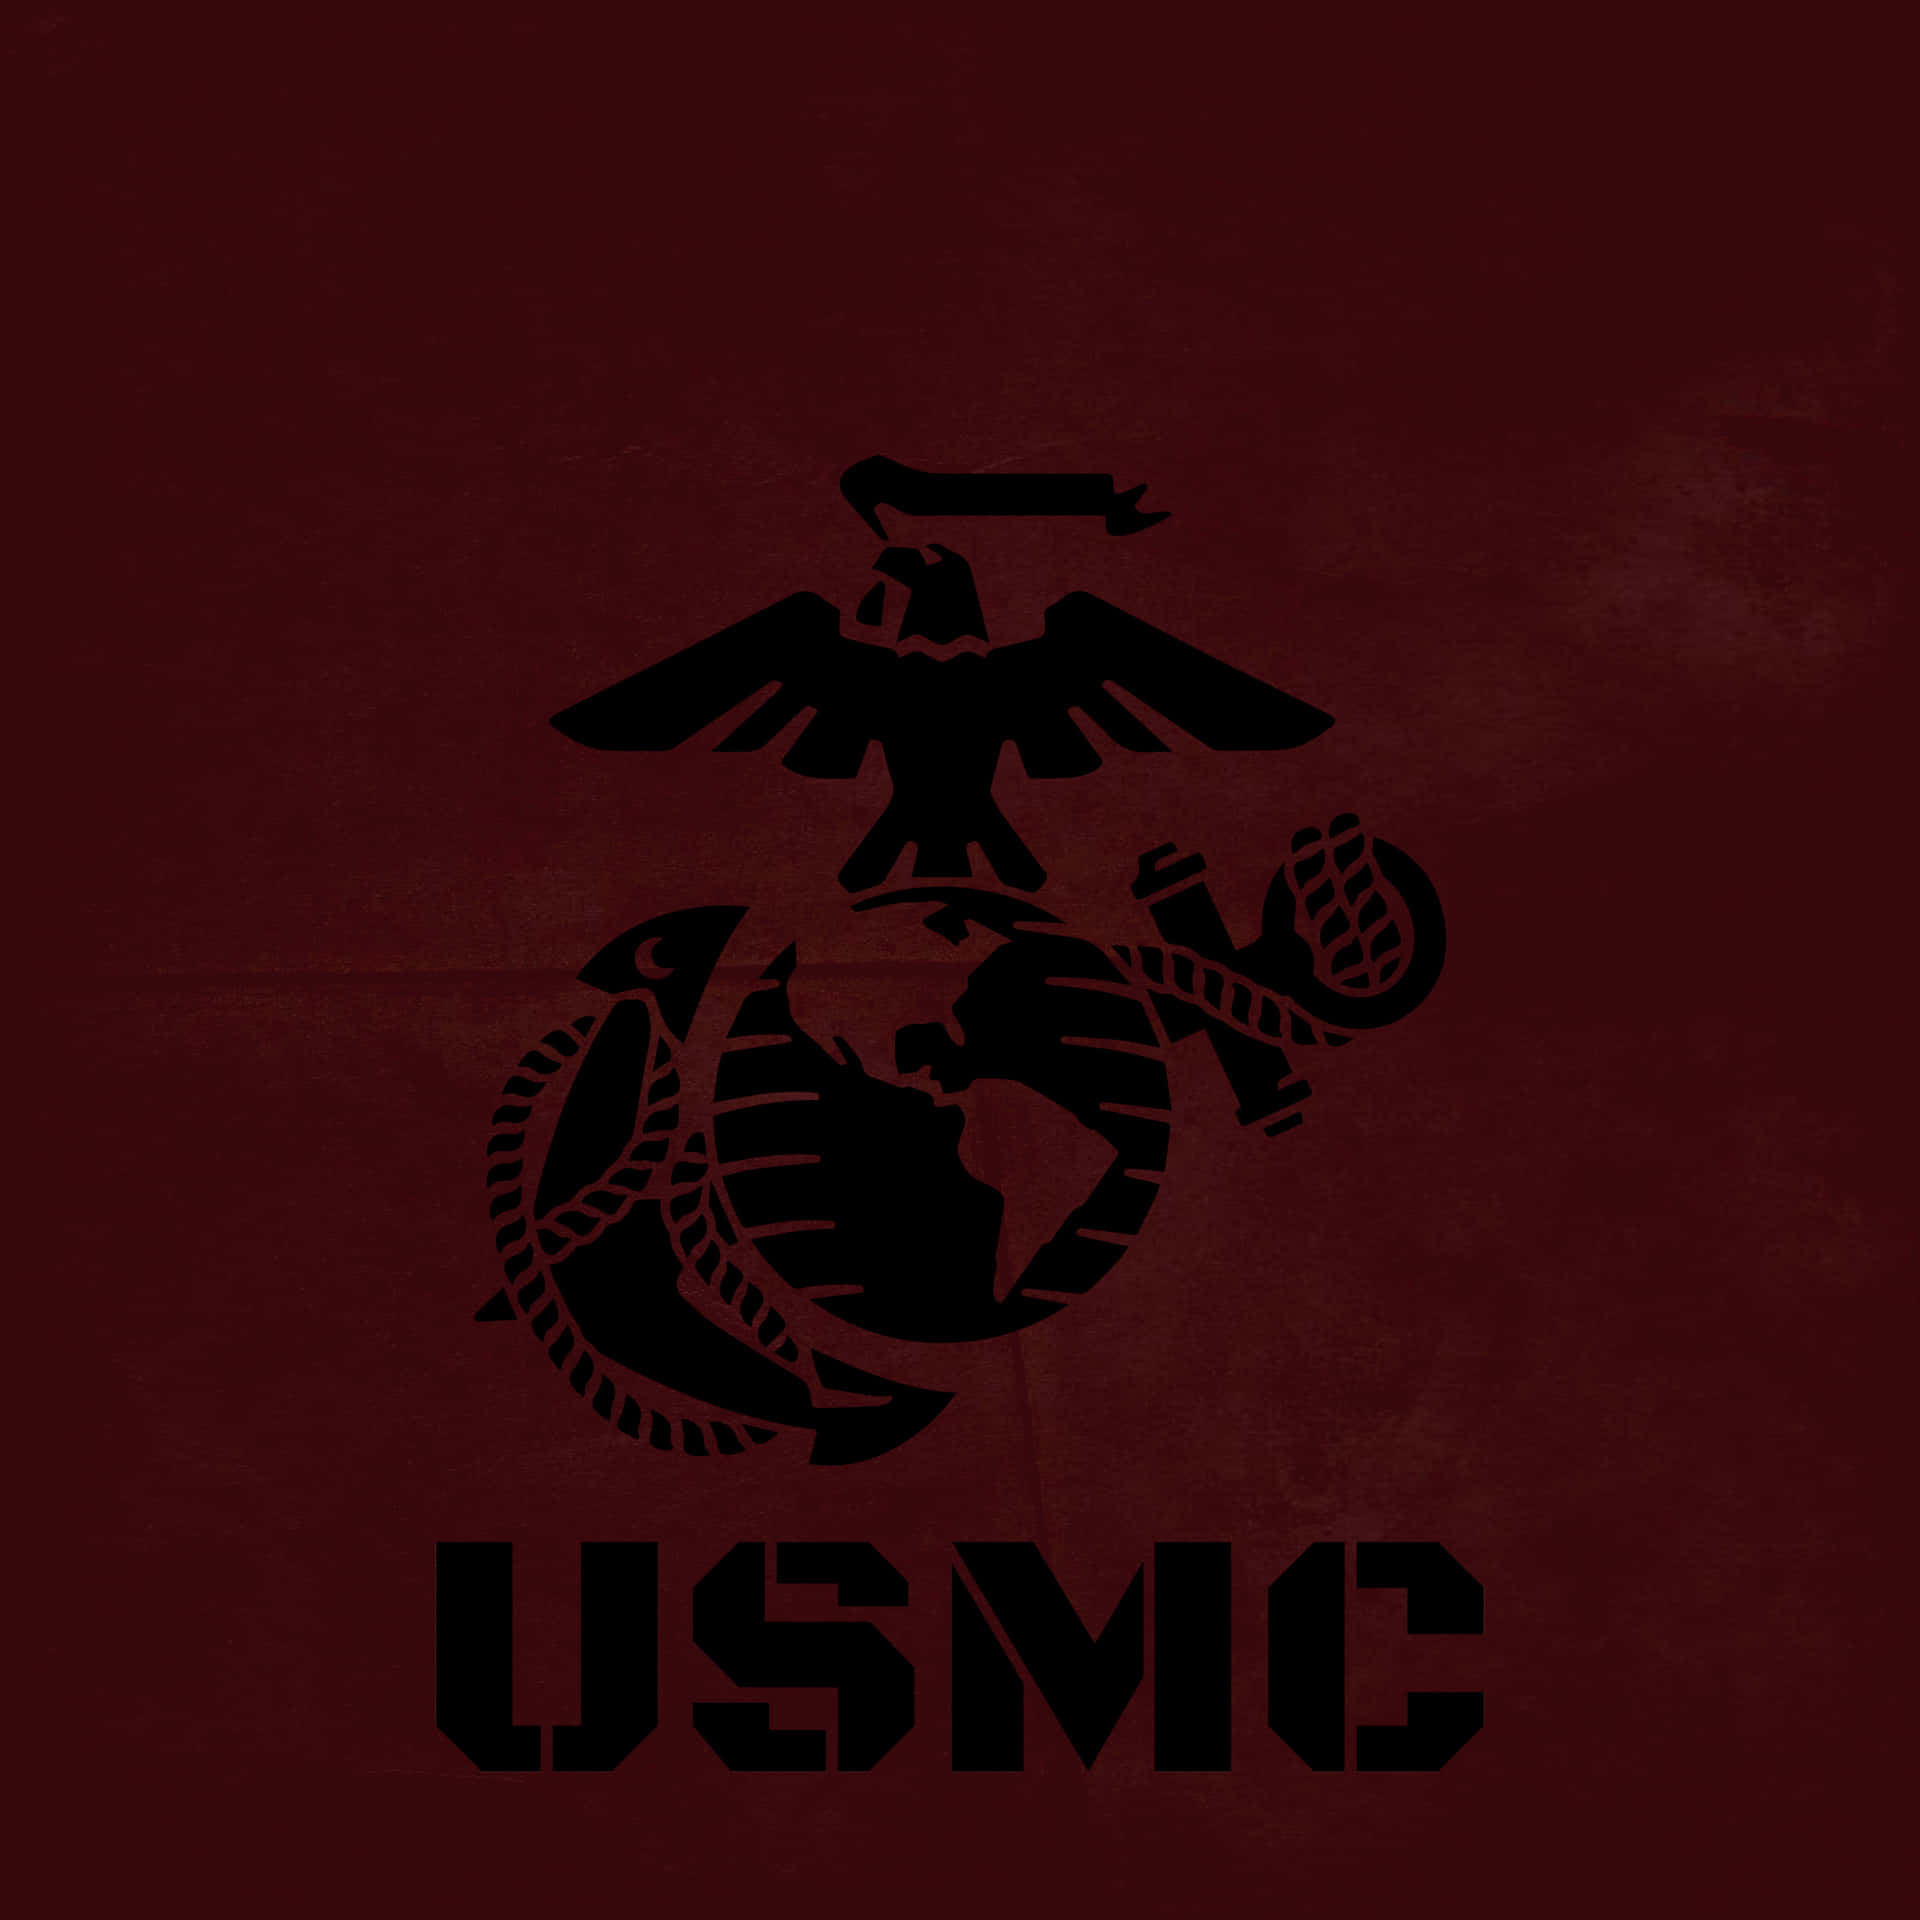 Download United States Marines, Semper Fi! Wallpaper | Wallpapers.com